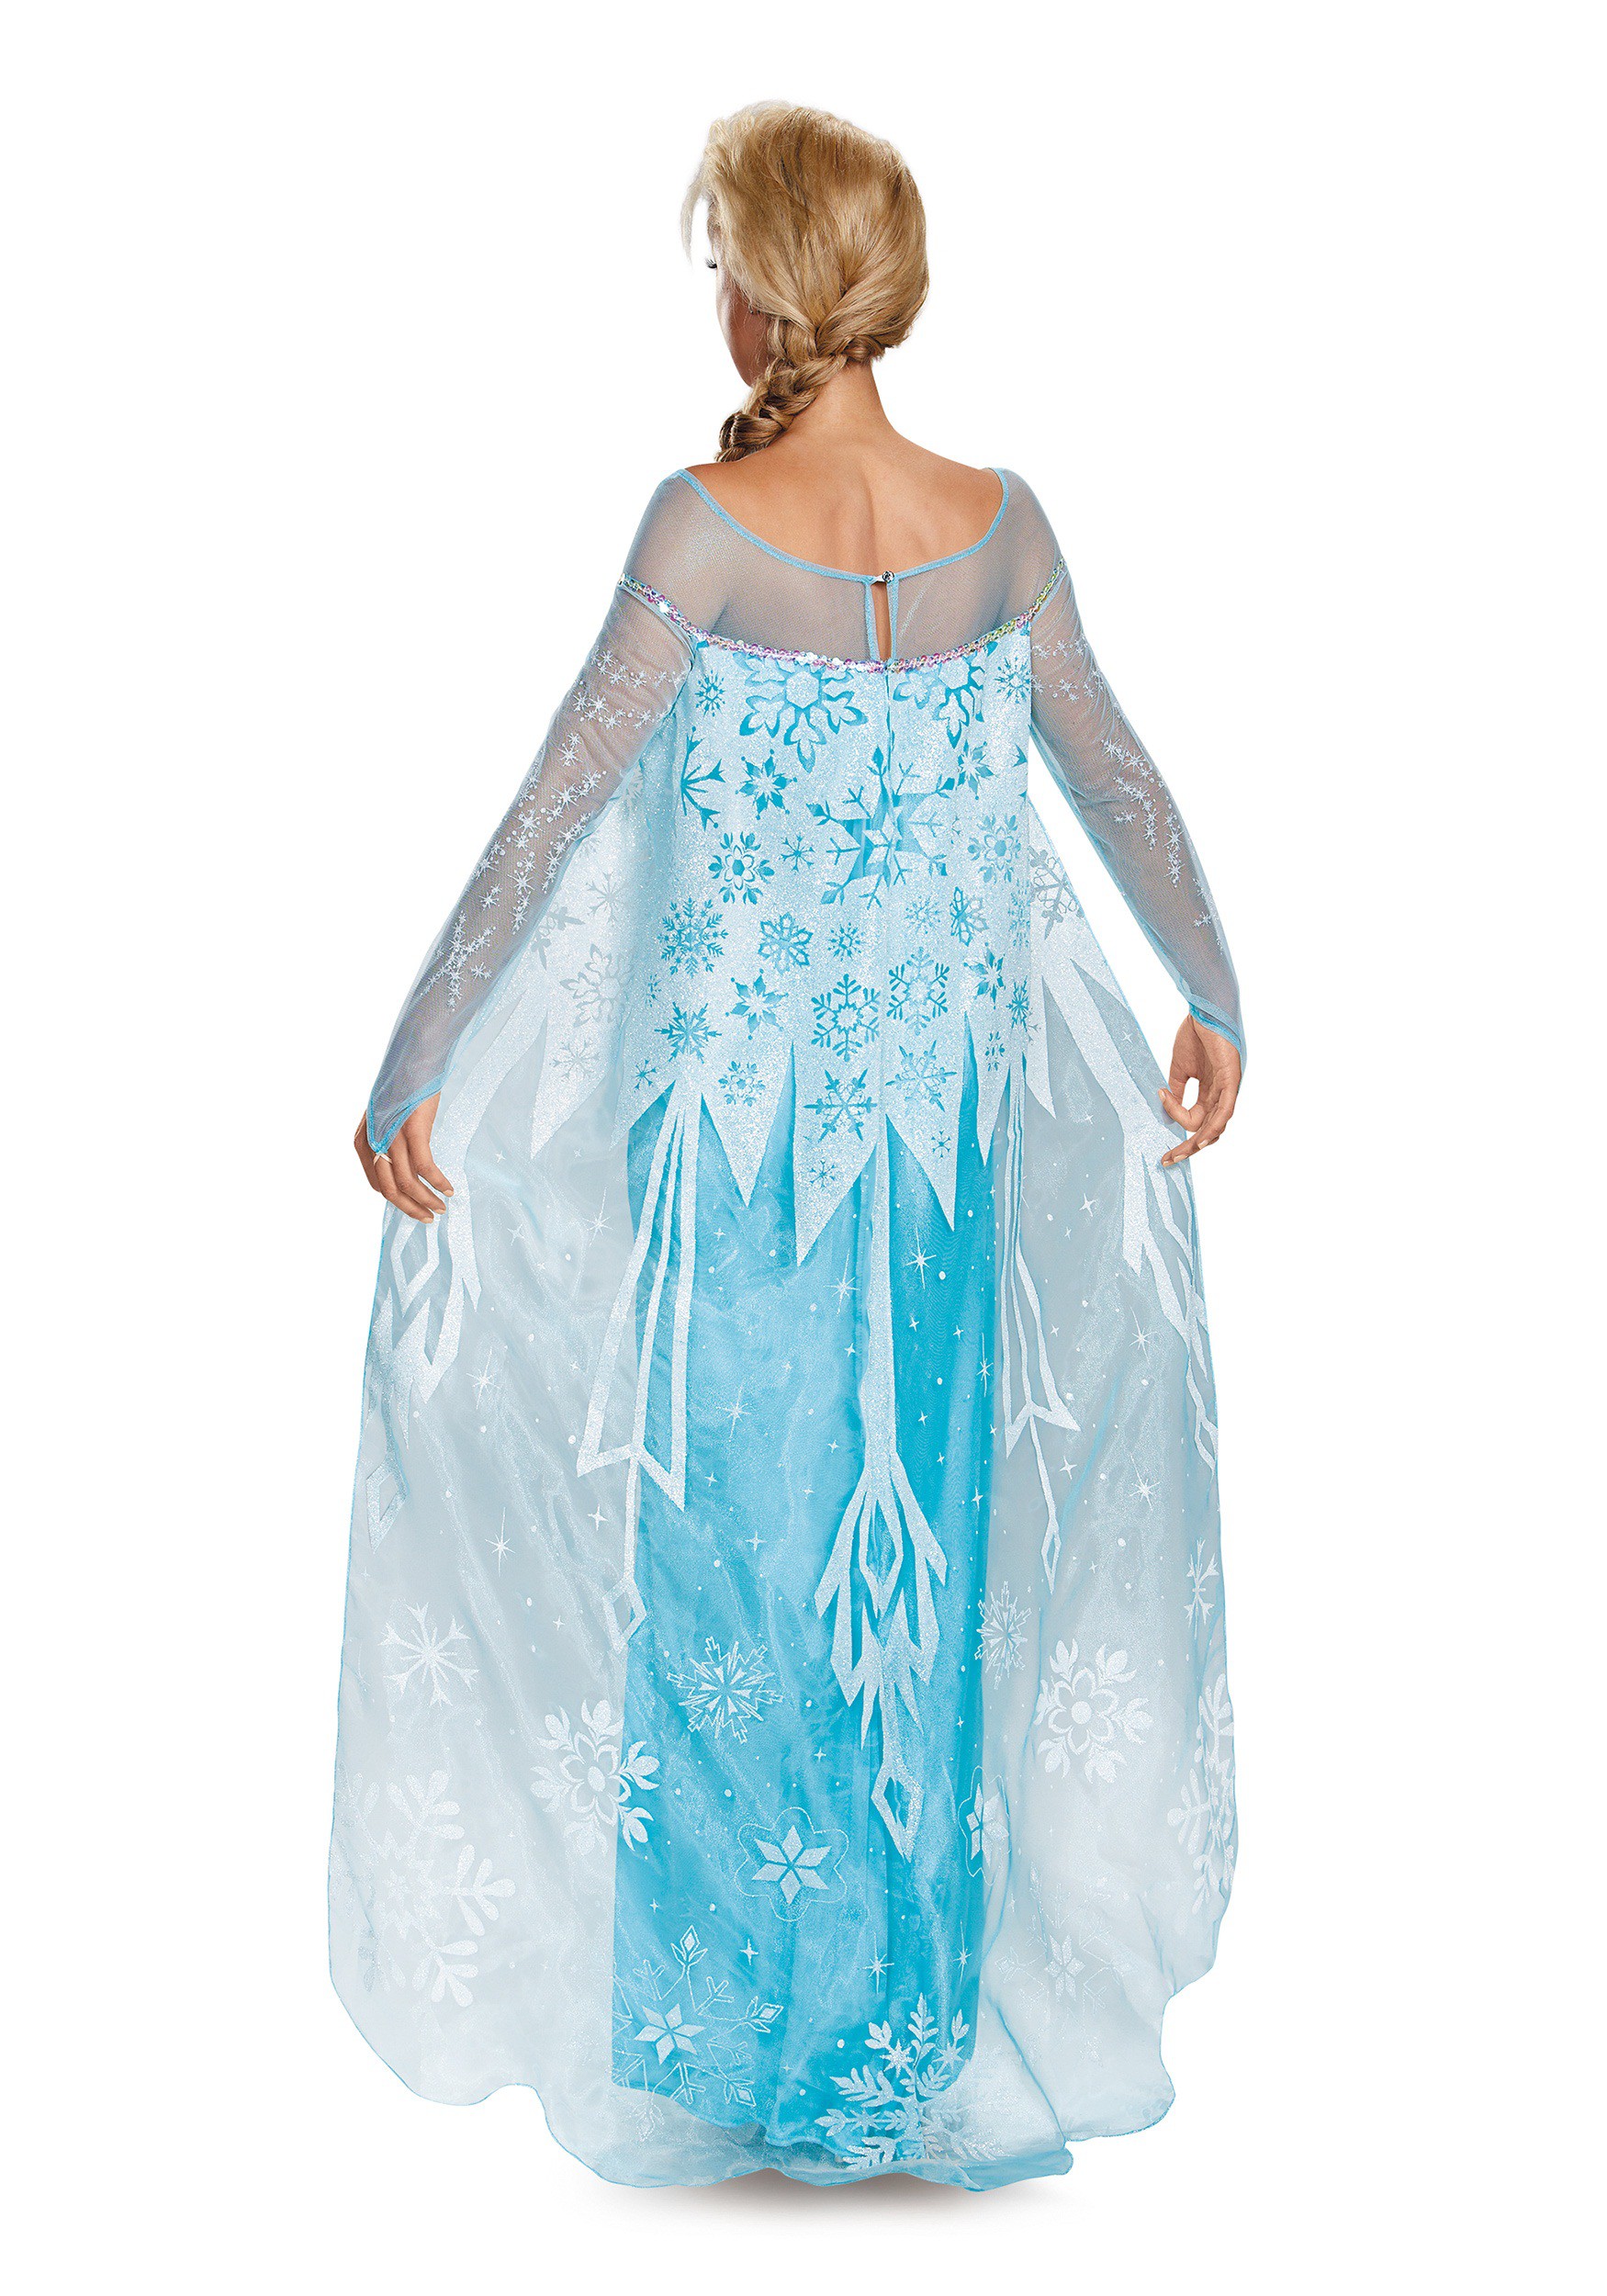 Frozen Elsa Prestige Adults Costume 